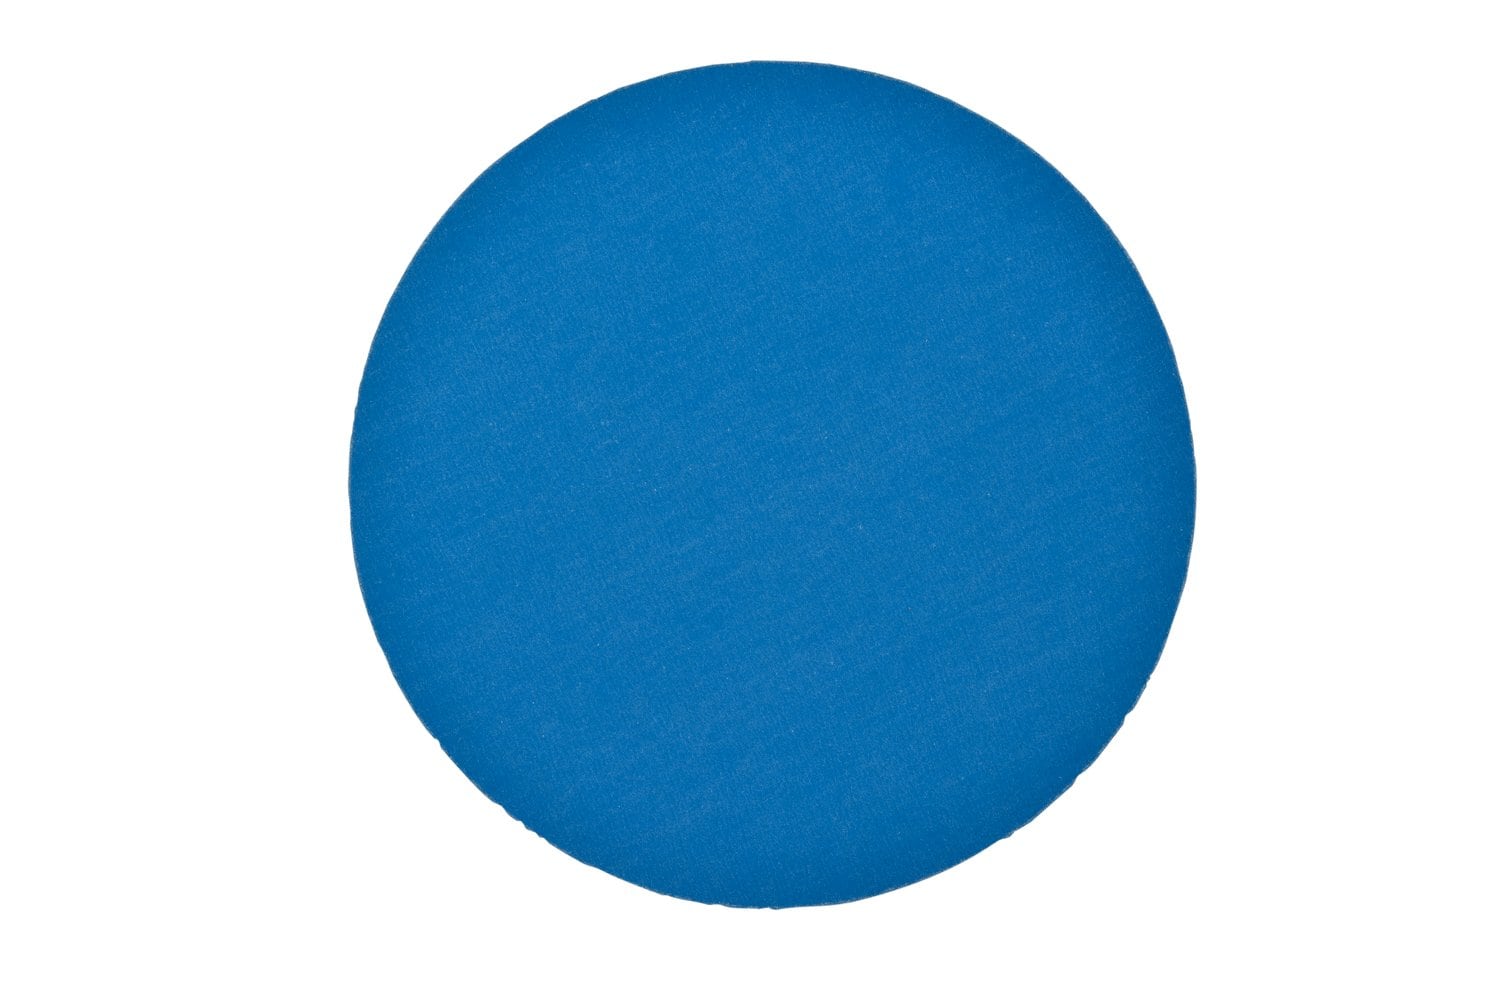 7100199658 - 3M Hookit Blue Abrasive Disc, 36249, 6 in, 500 grade, No Hole, 50 discs per carton, 4 cartons per case